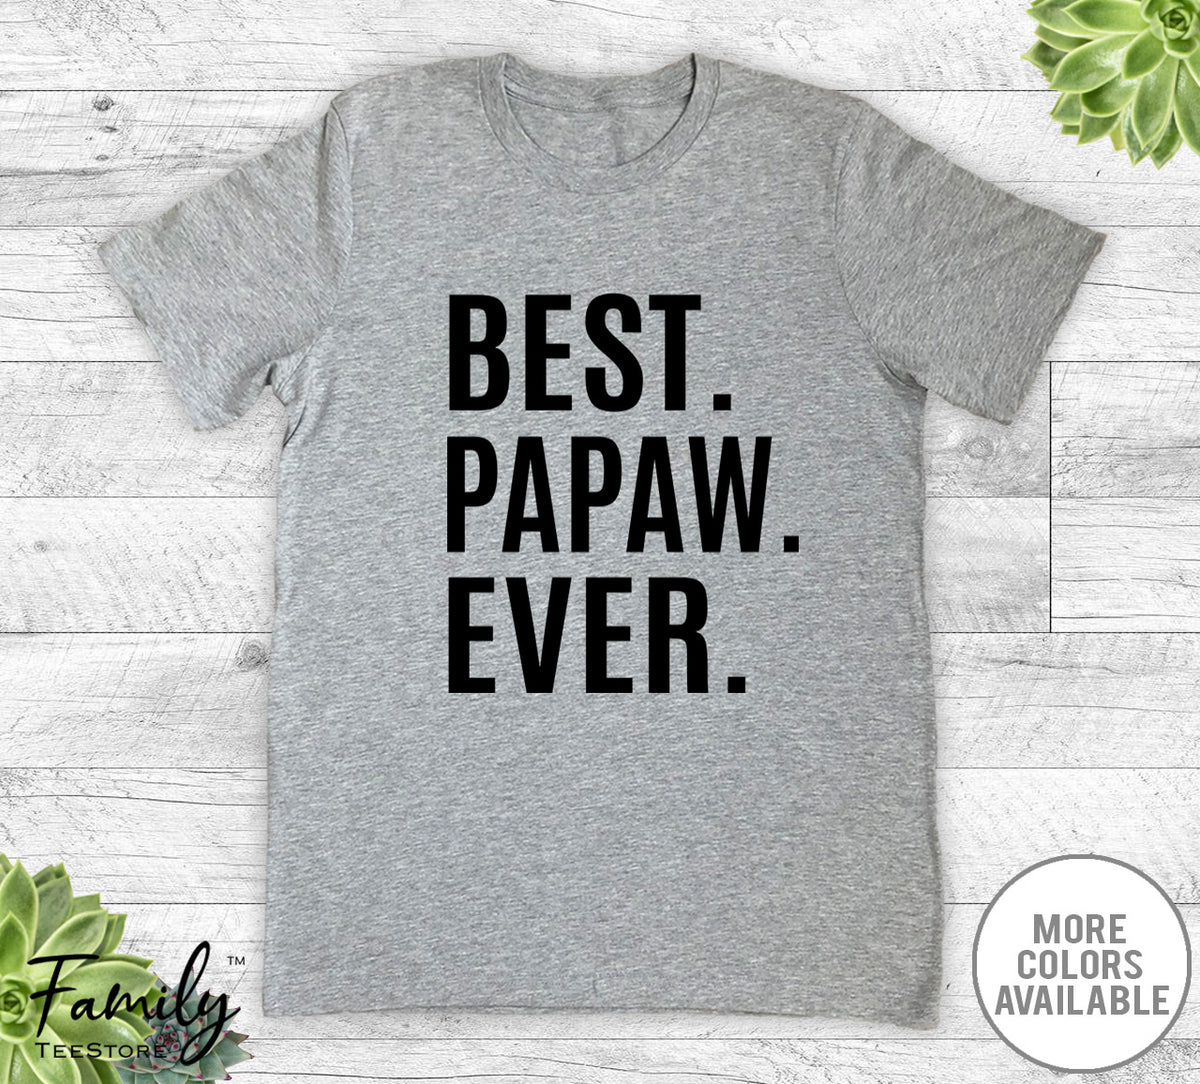 Best Papaw Ever - Unisex T-shirt - Papaw Shirt - Papaw Gift - familyteeprints